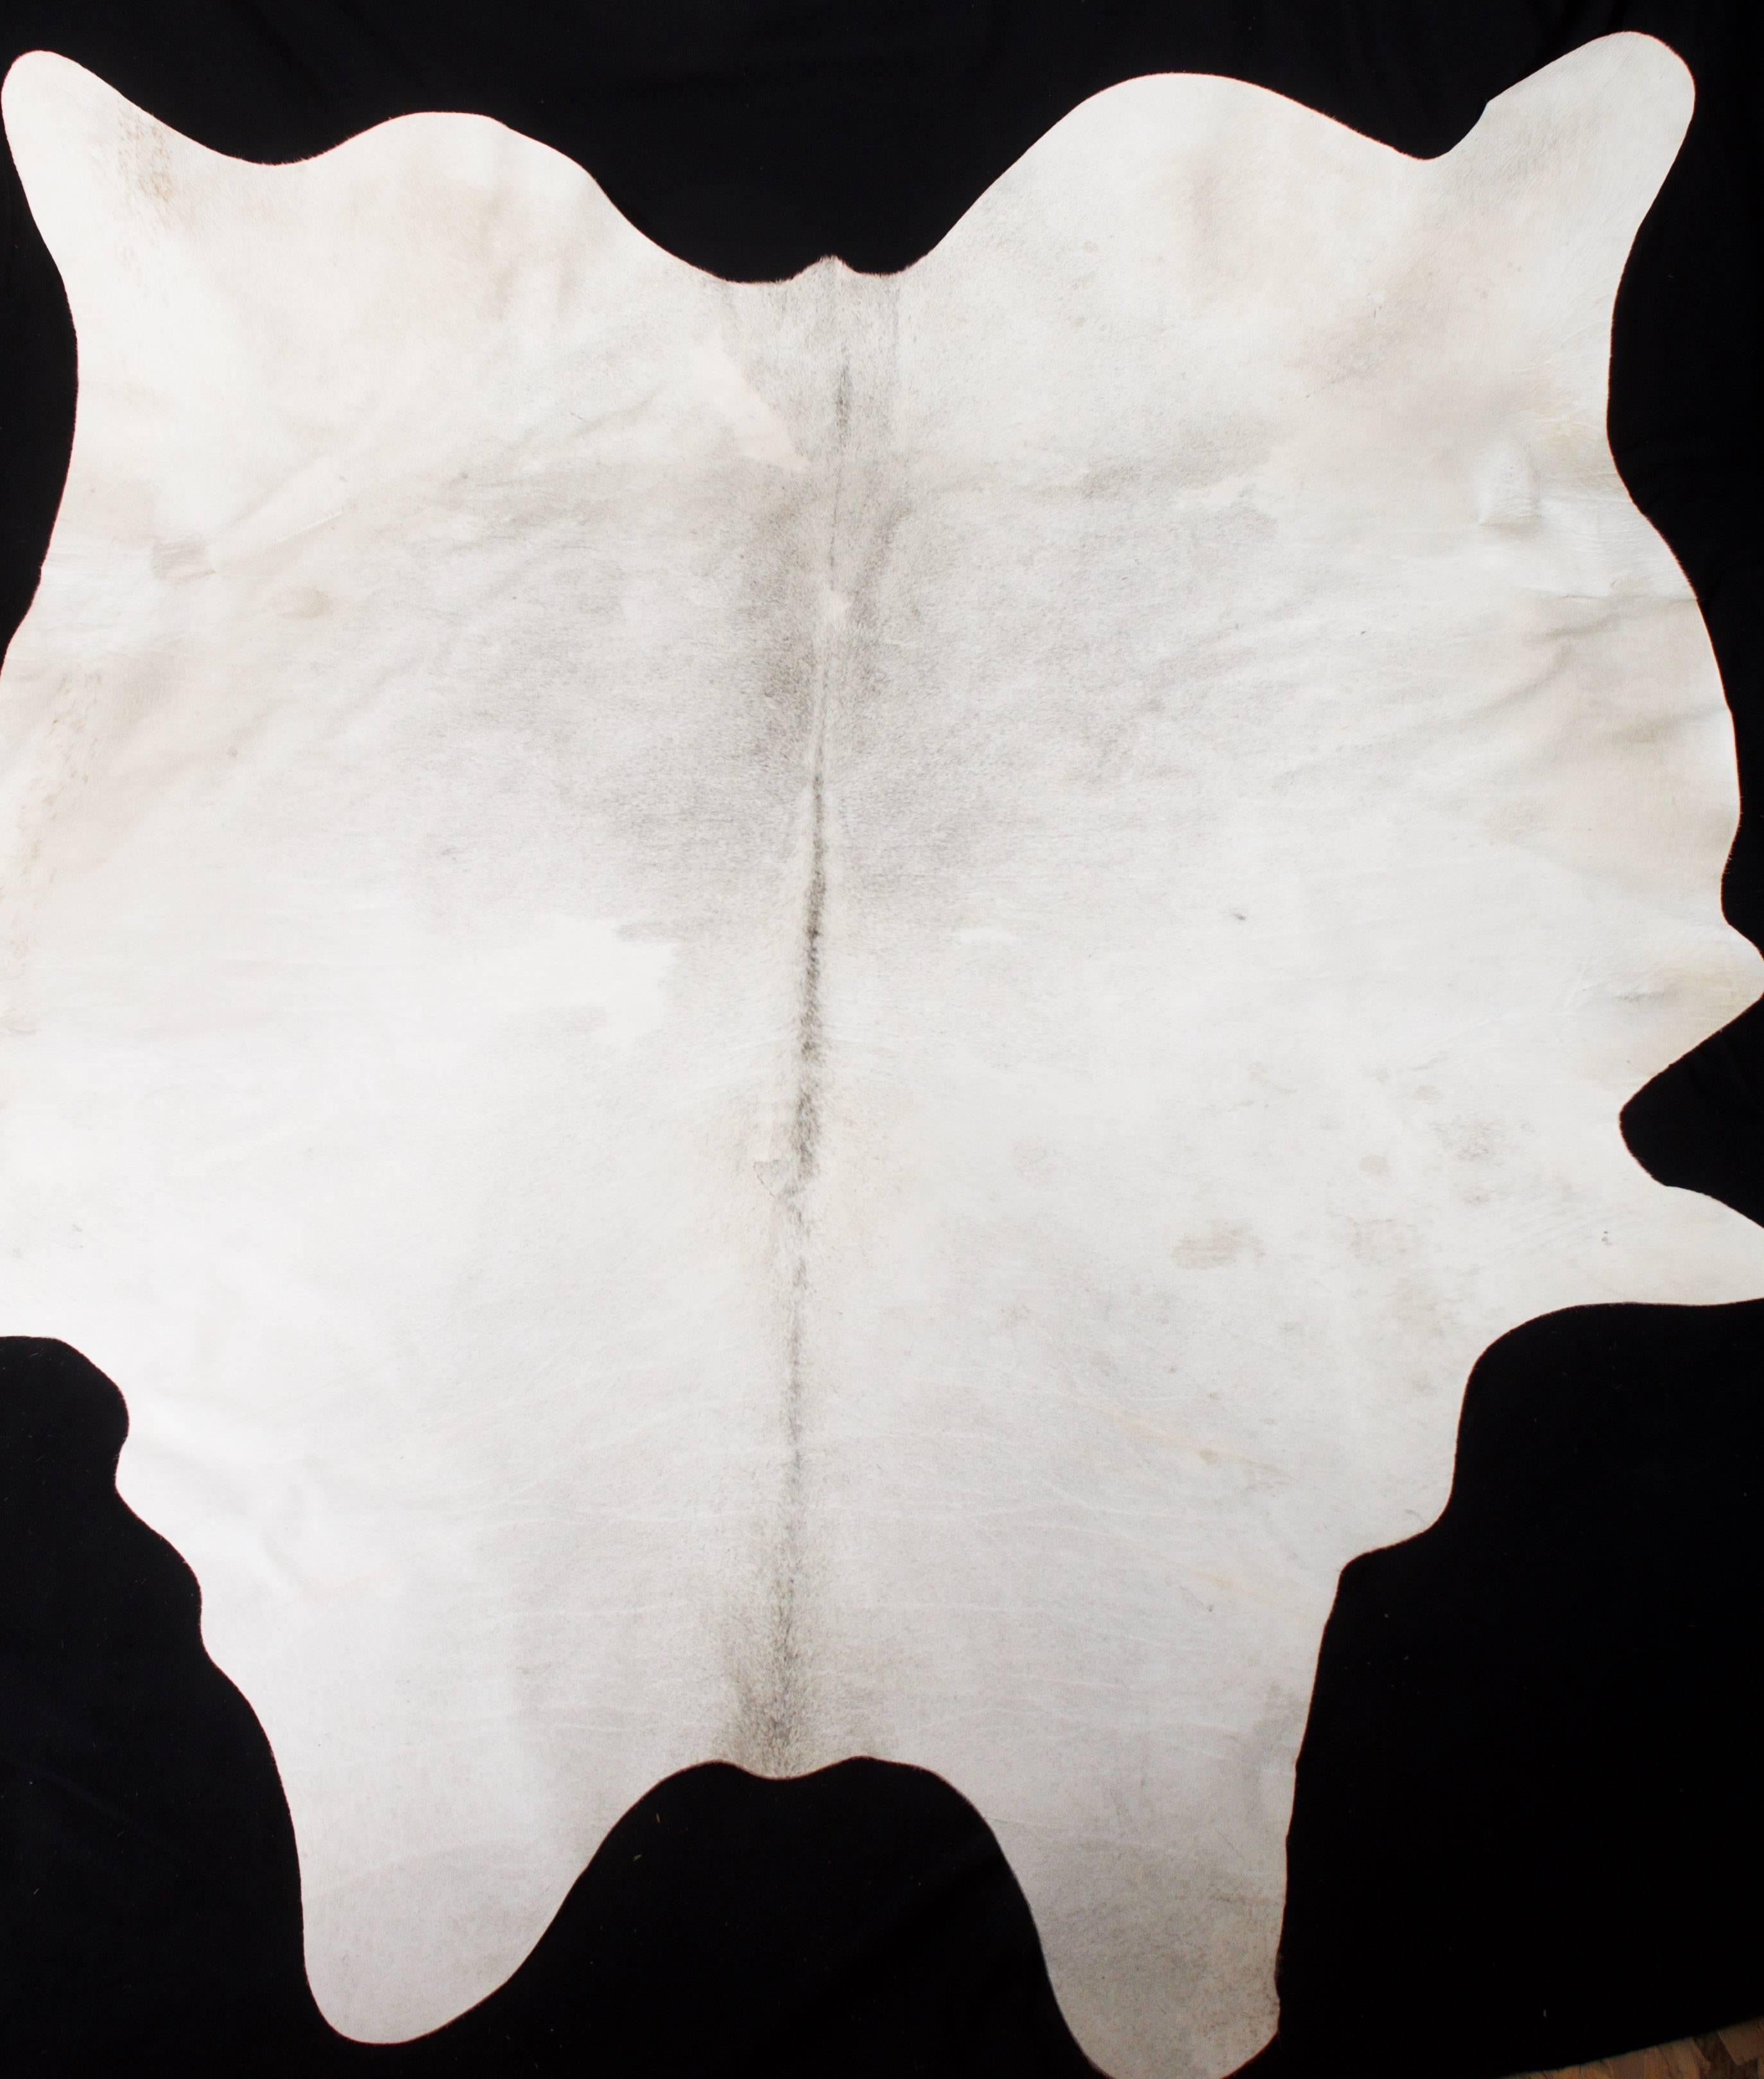 Gray cowhide rug.
Dimensions: 212 x 240cm (83.46" x 94.48").